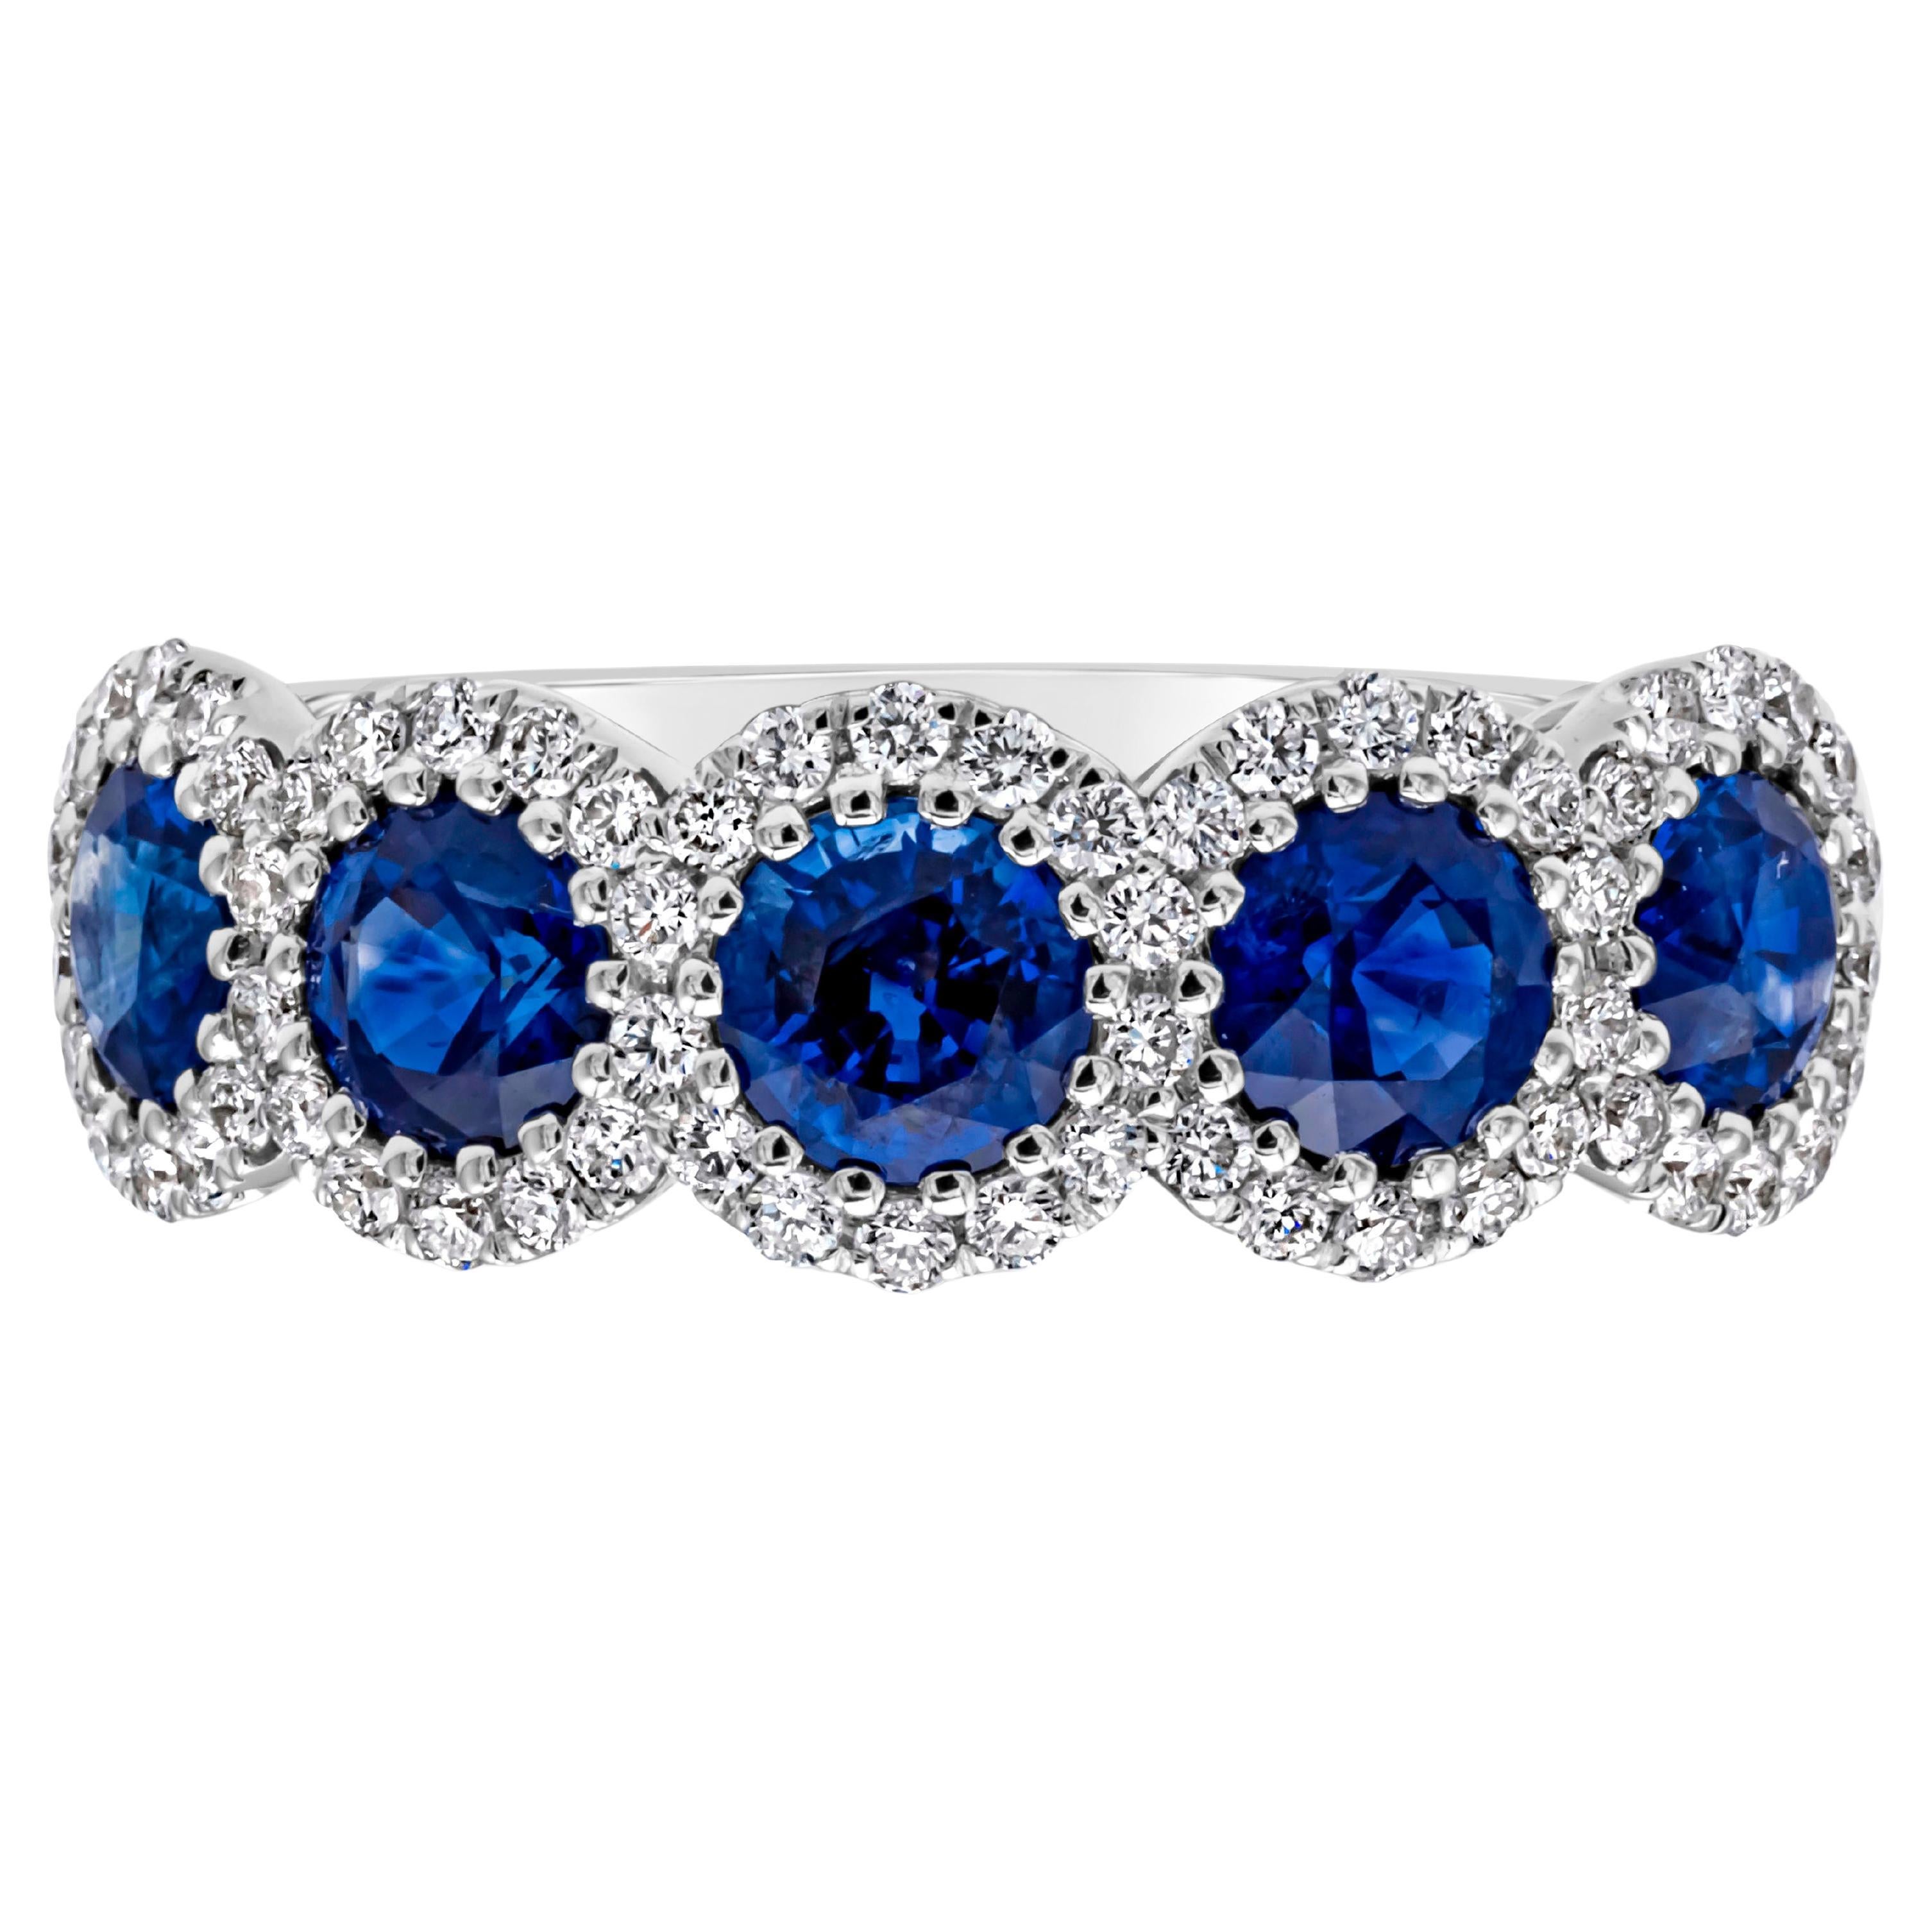 Roman Malakov 1.88 Carats Total Round Cut Blue Sapphire & Diamond Wedding Band For Sale